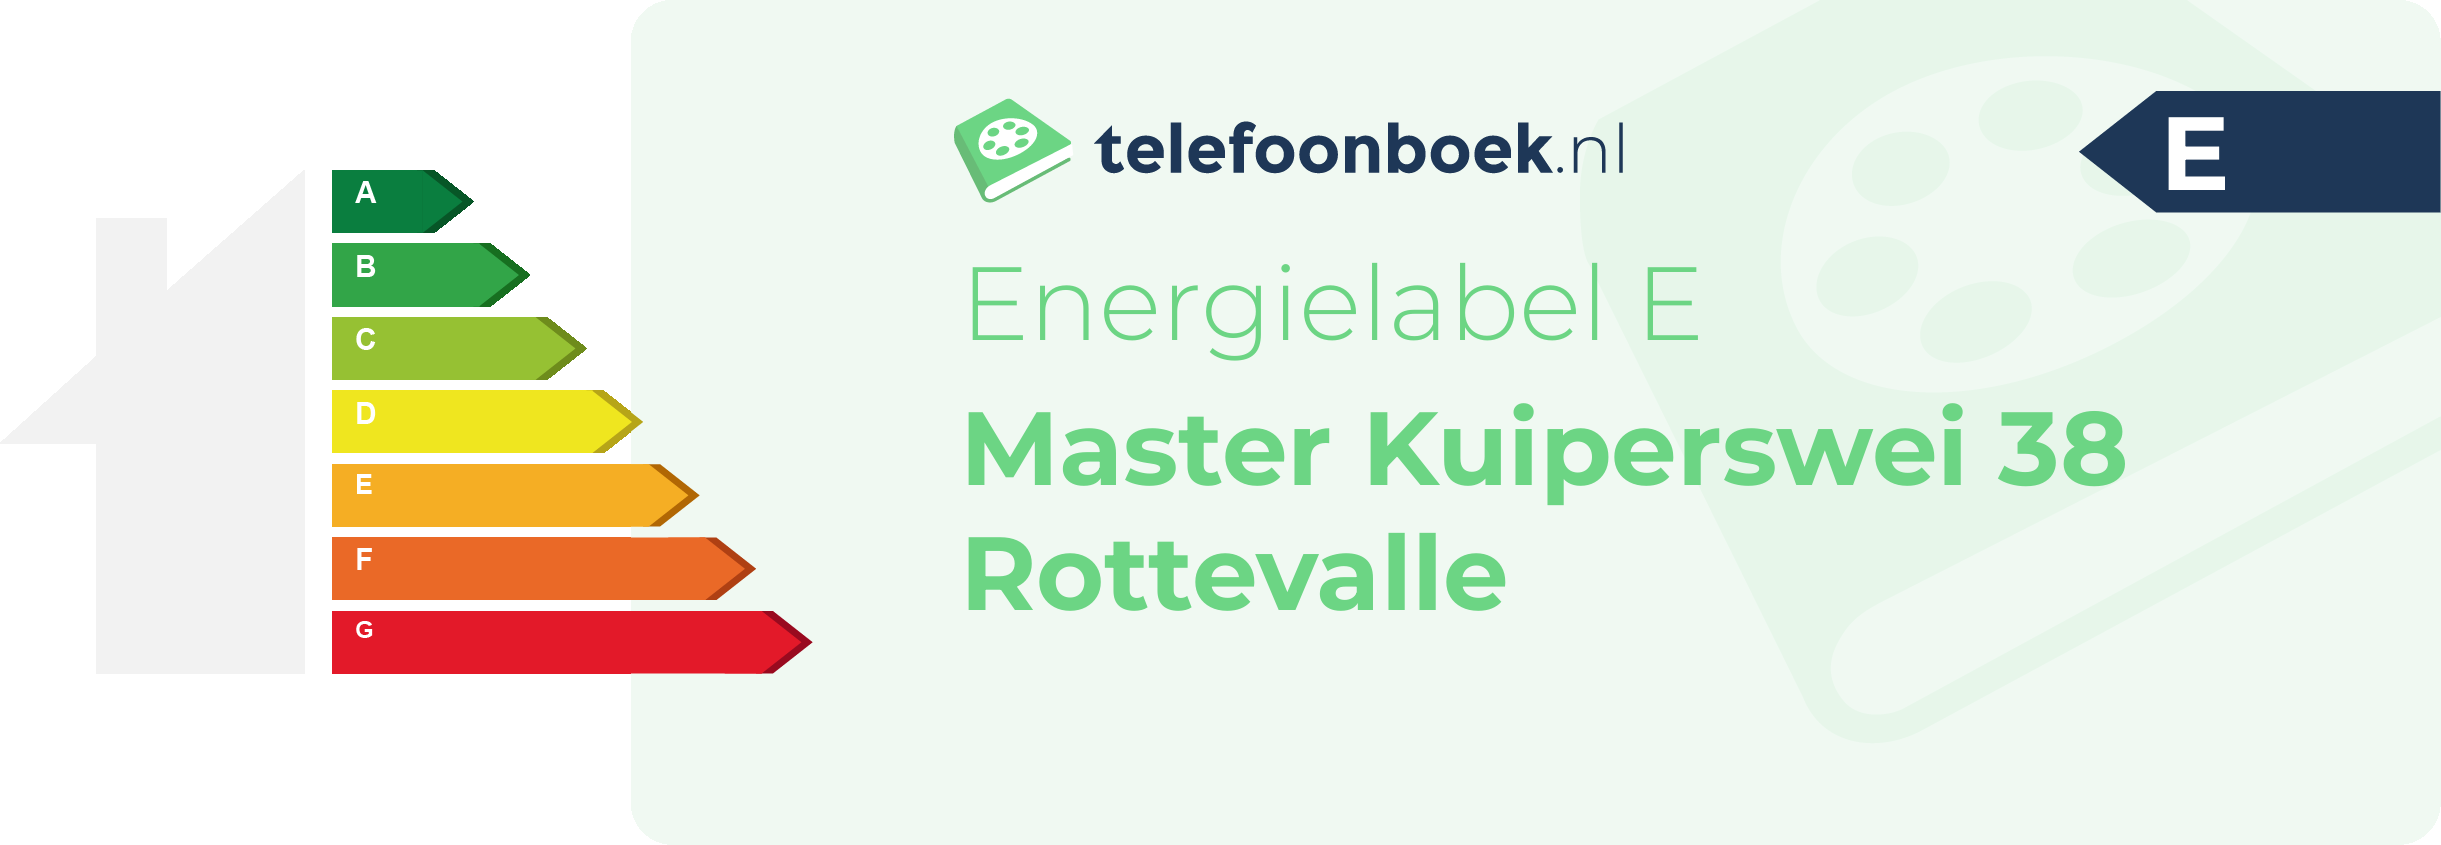 Energielabel Master Kuiperswei 38 Rottevalle